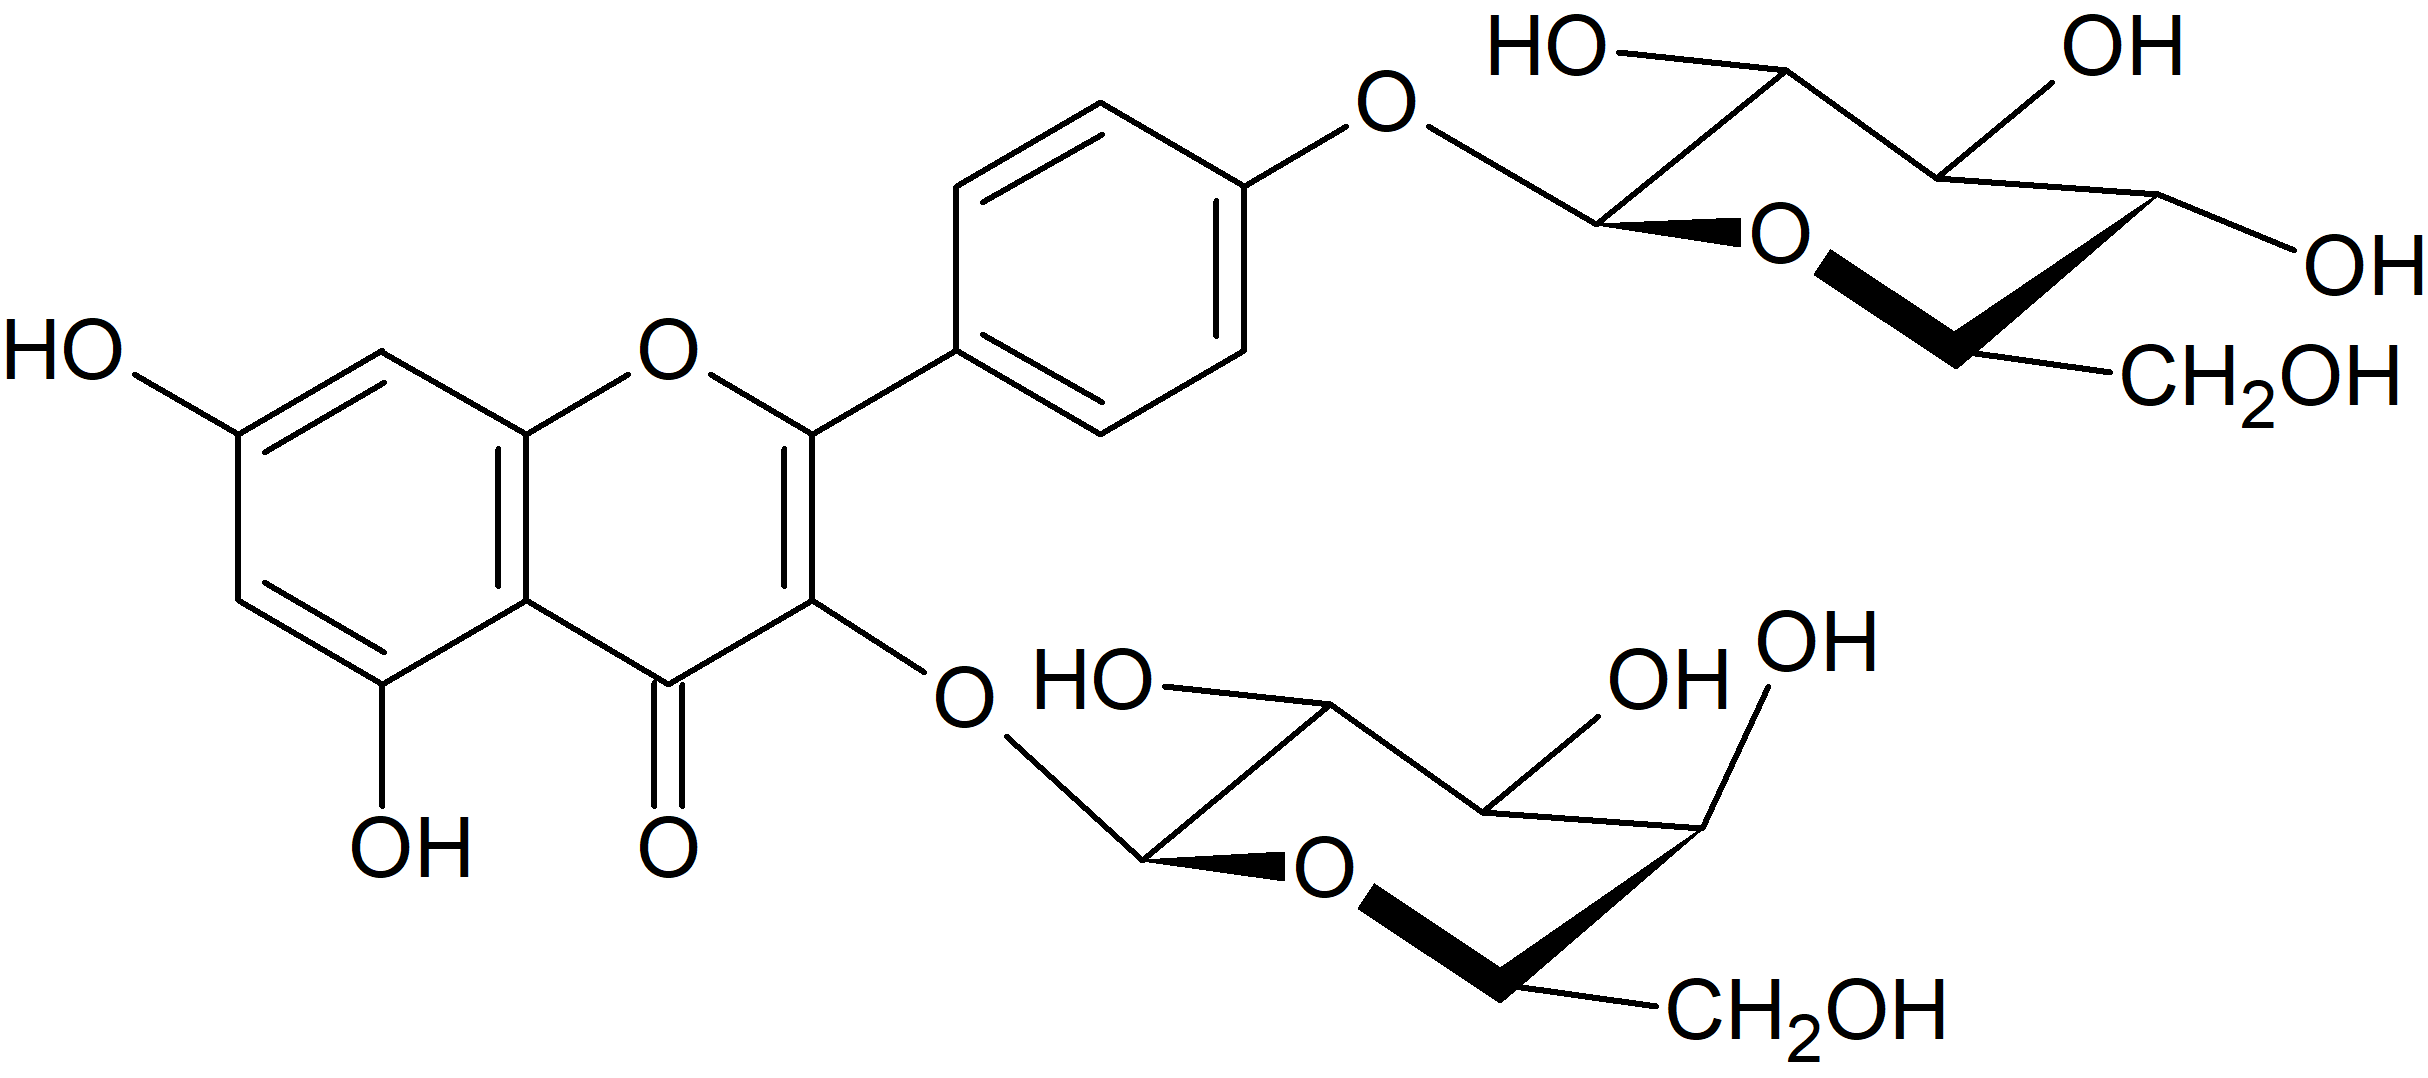 Kaempferol 3-galactoside-4'-glucoside